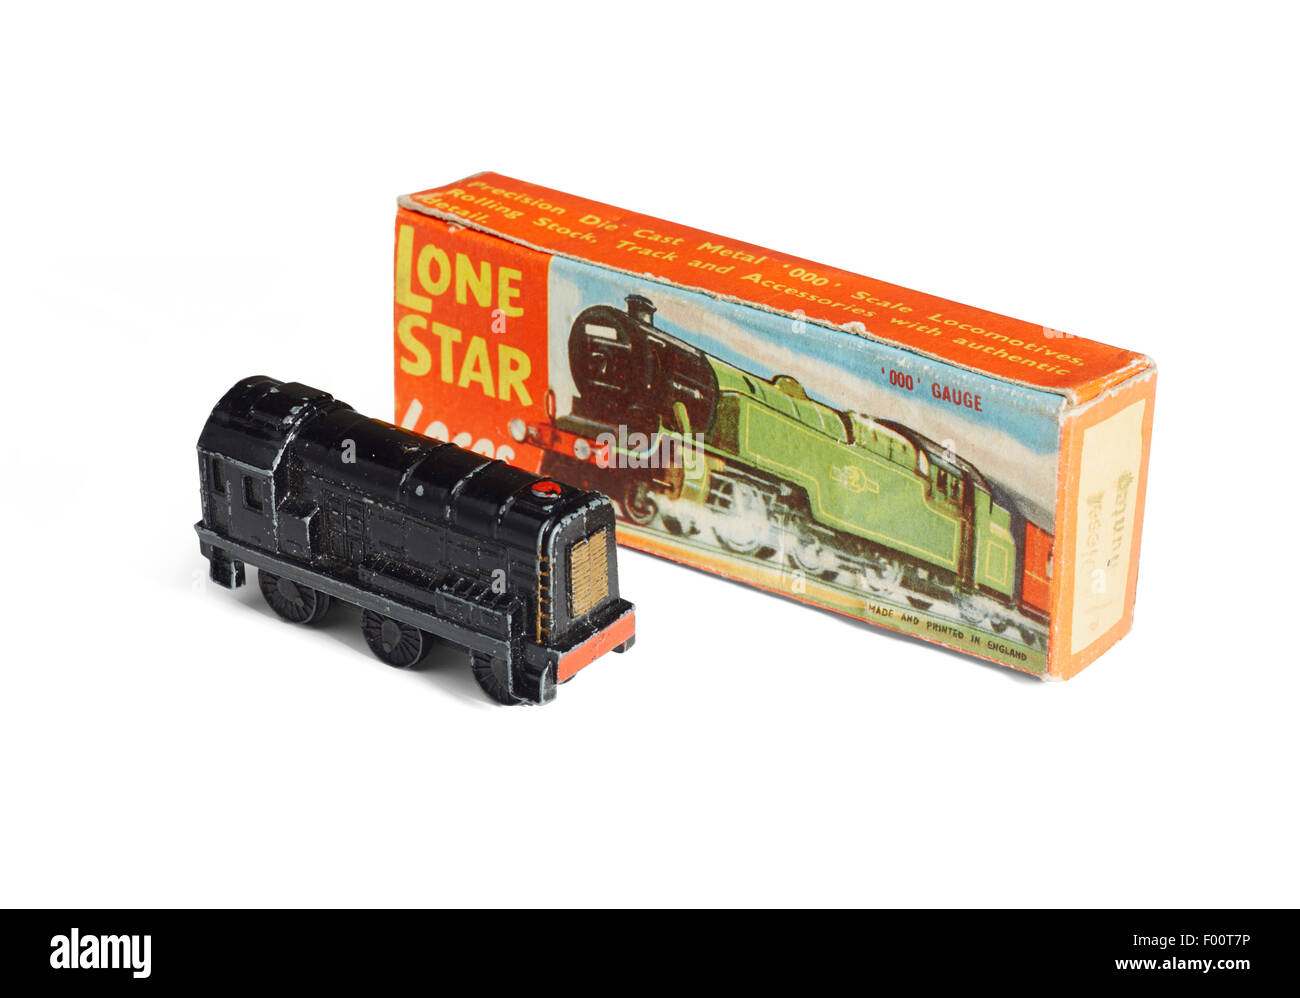 Tren de juguete Lone Star shunter diesel y caja original Foto de stock